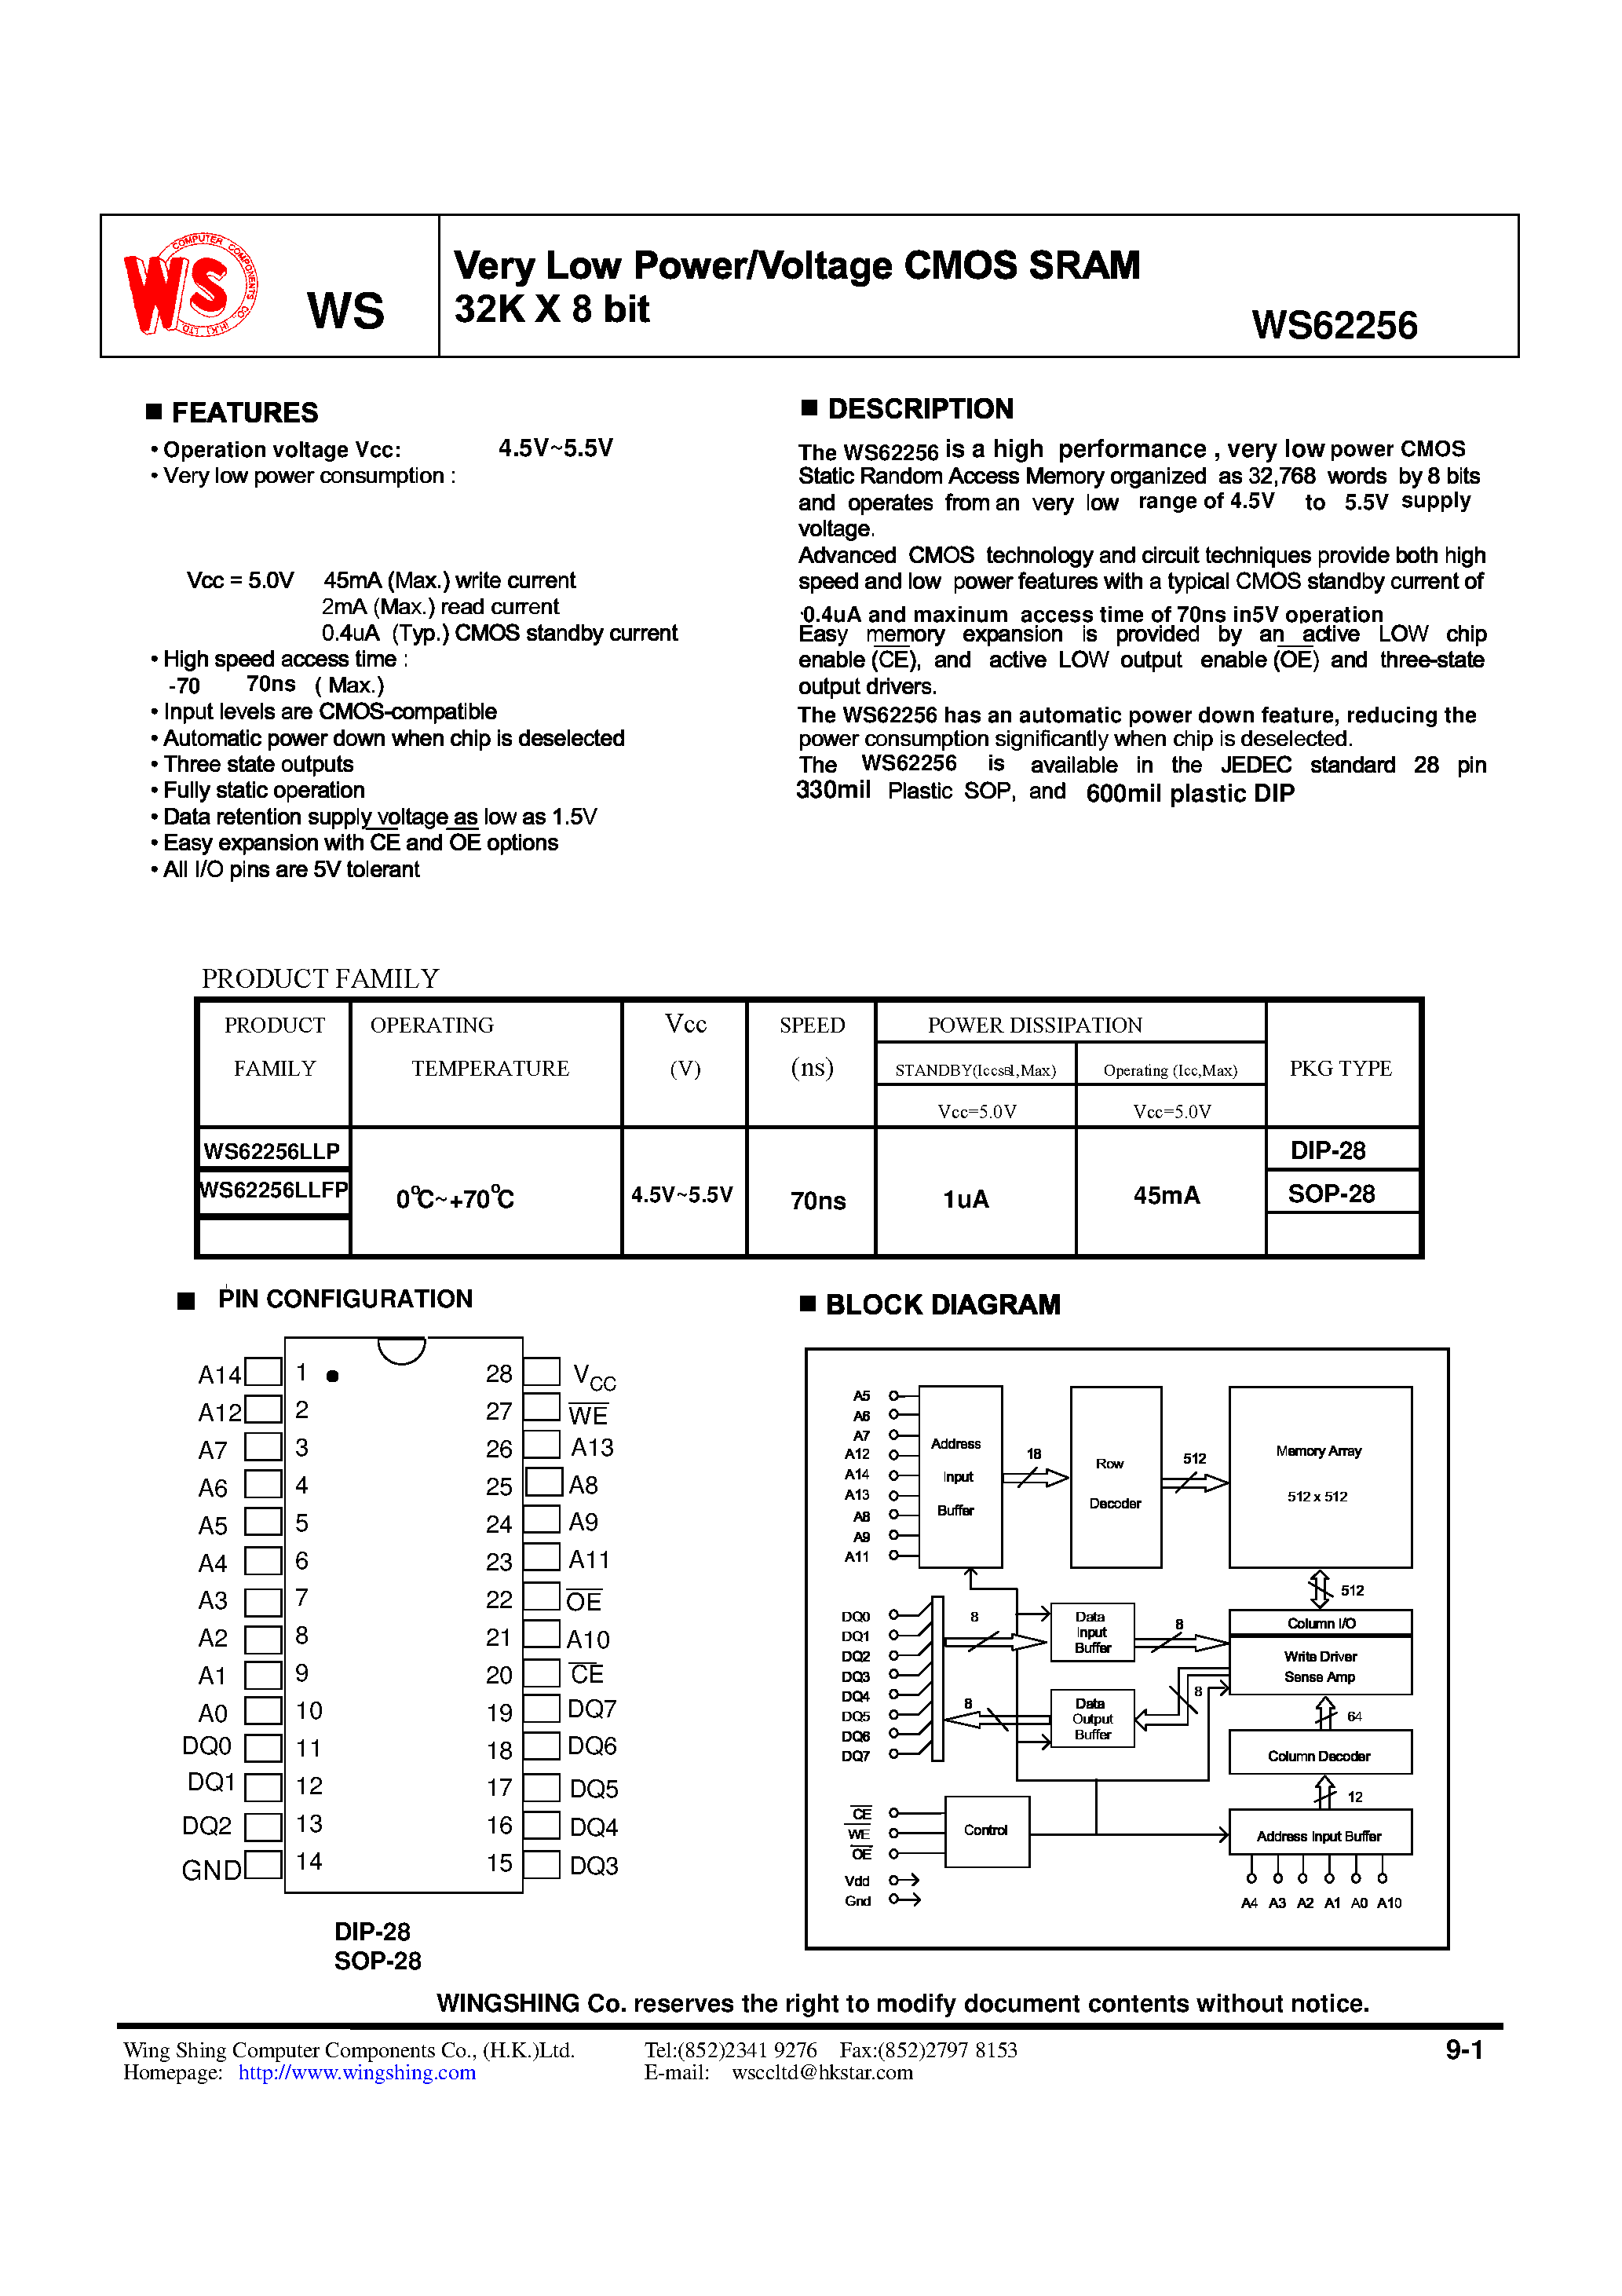 Datasheet WS62256LLFP - Very Low Power / Voltage CMOS SRAM 32K X 8bit page 1